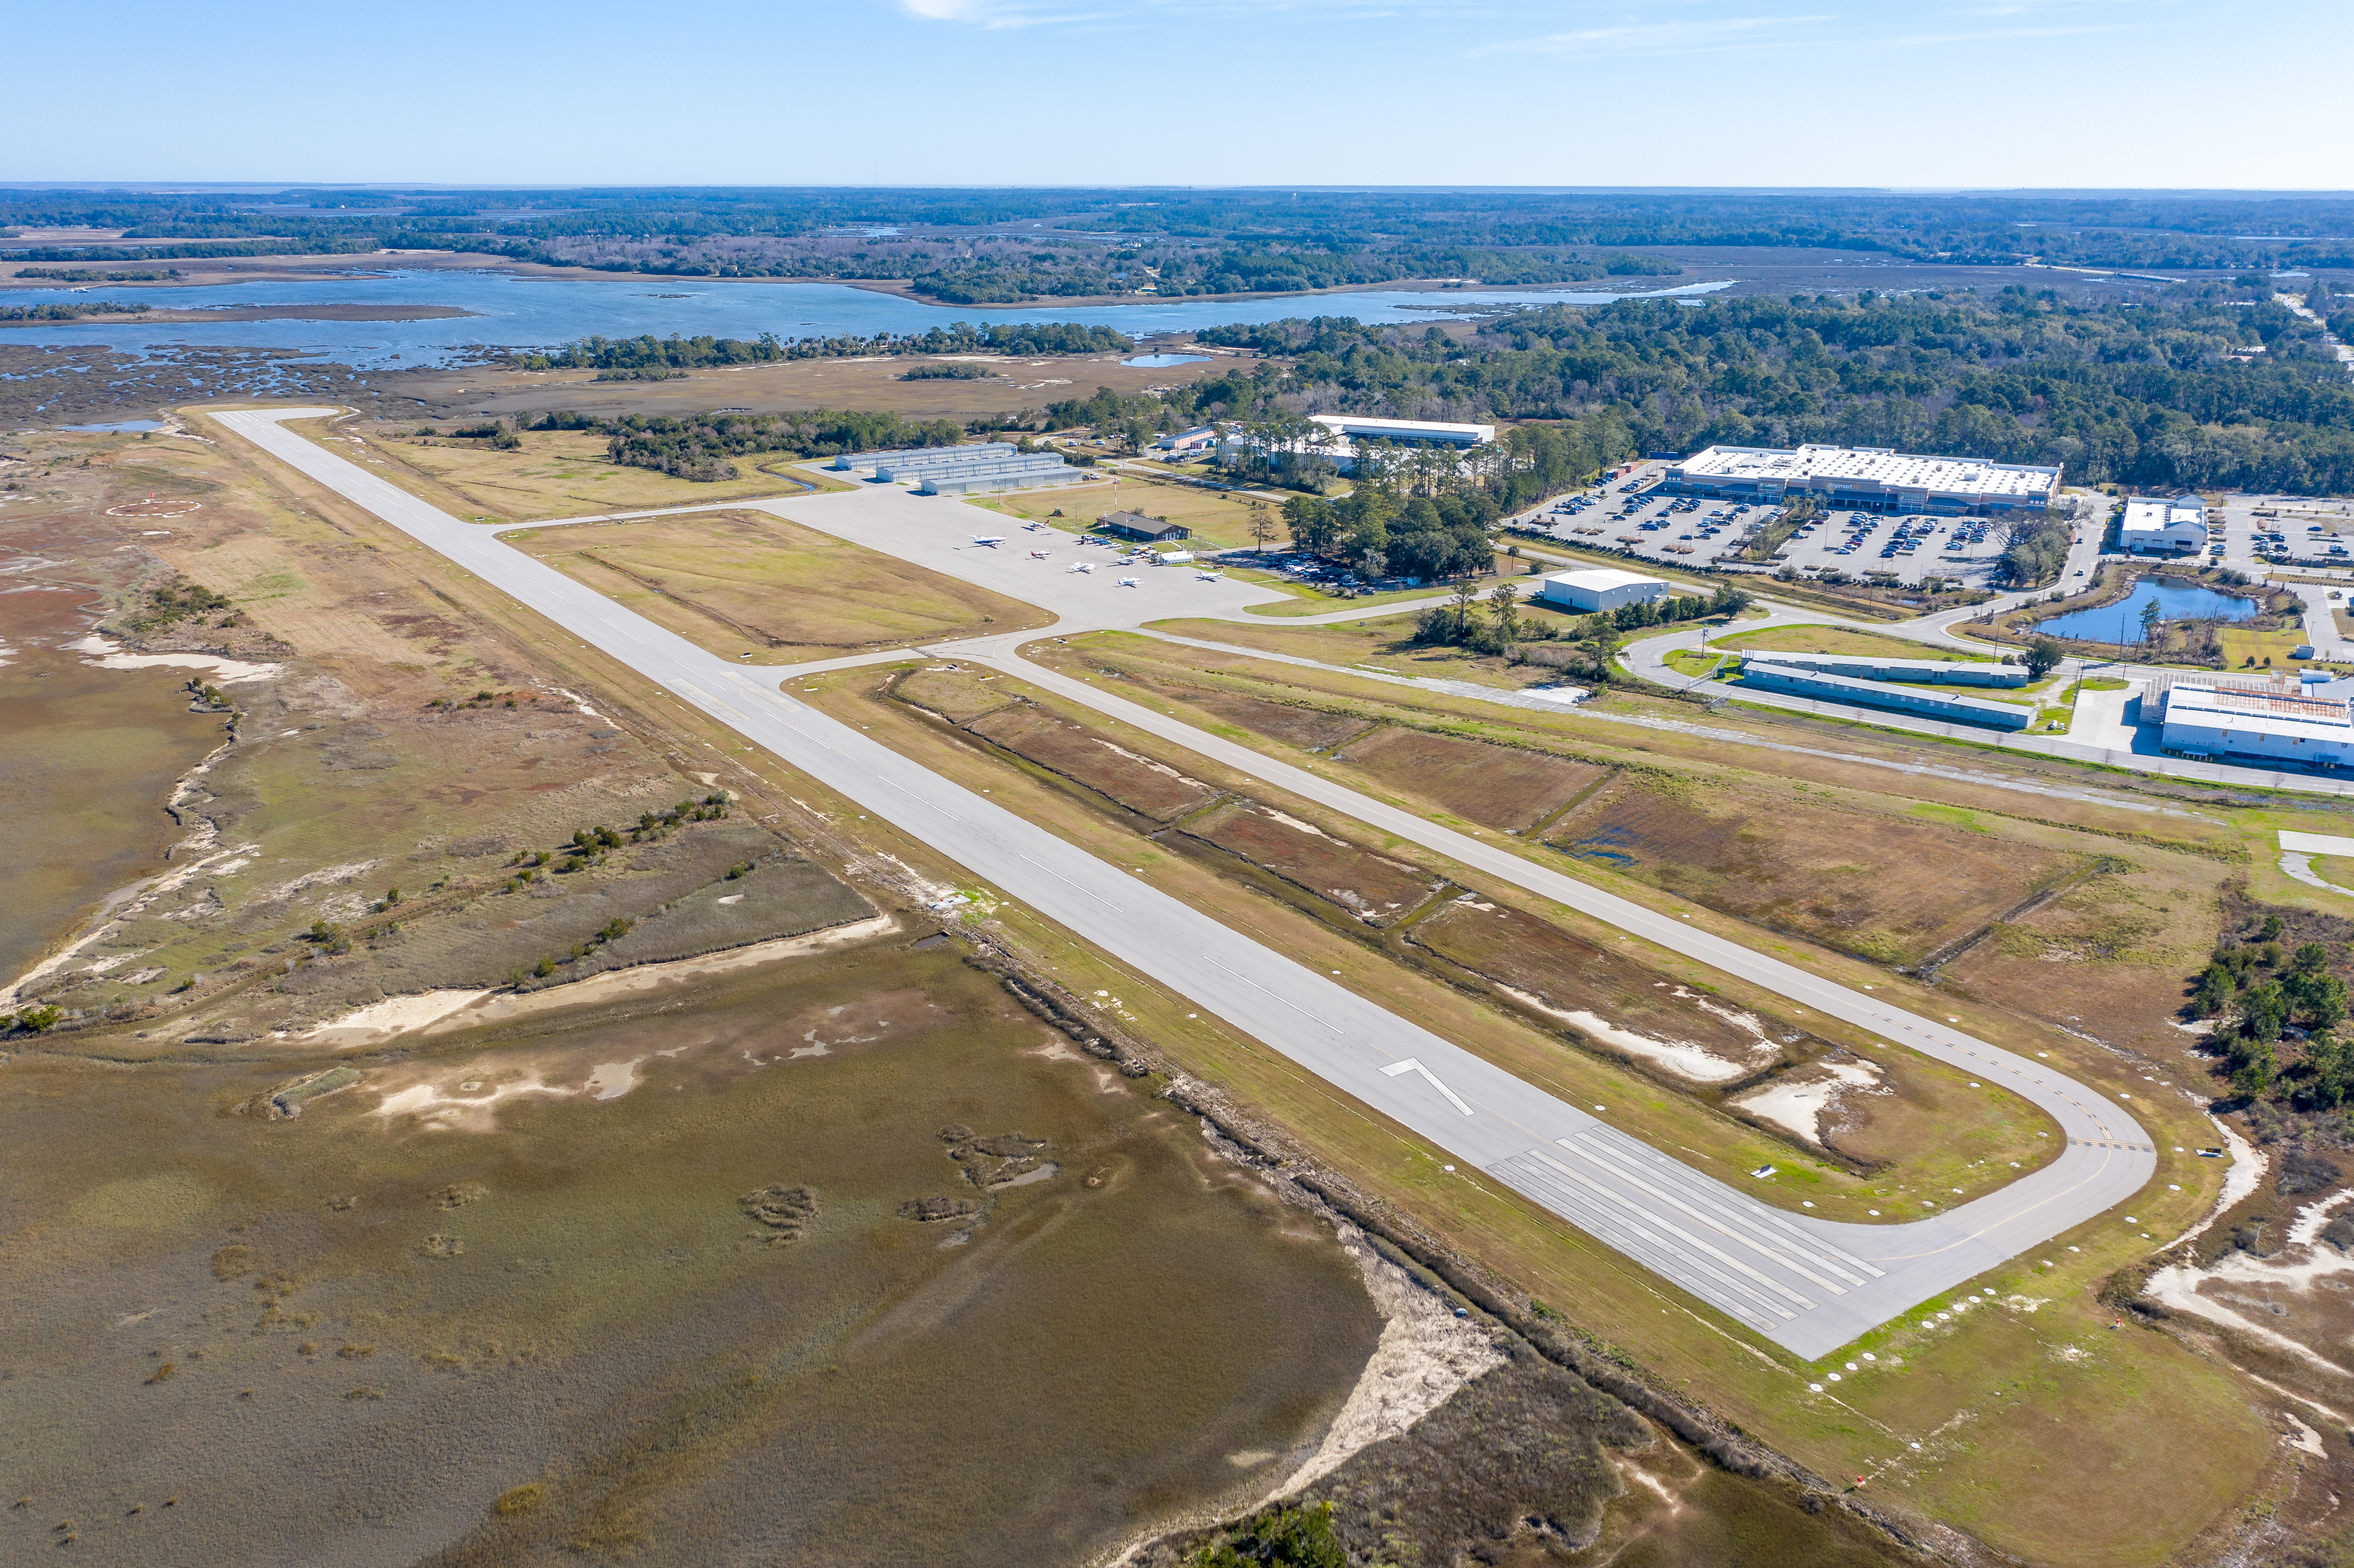 Beaufort Executive Airport to Host South Carolina Breakfast Club Sunday, February 7